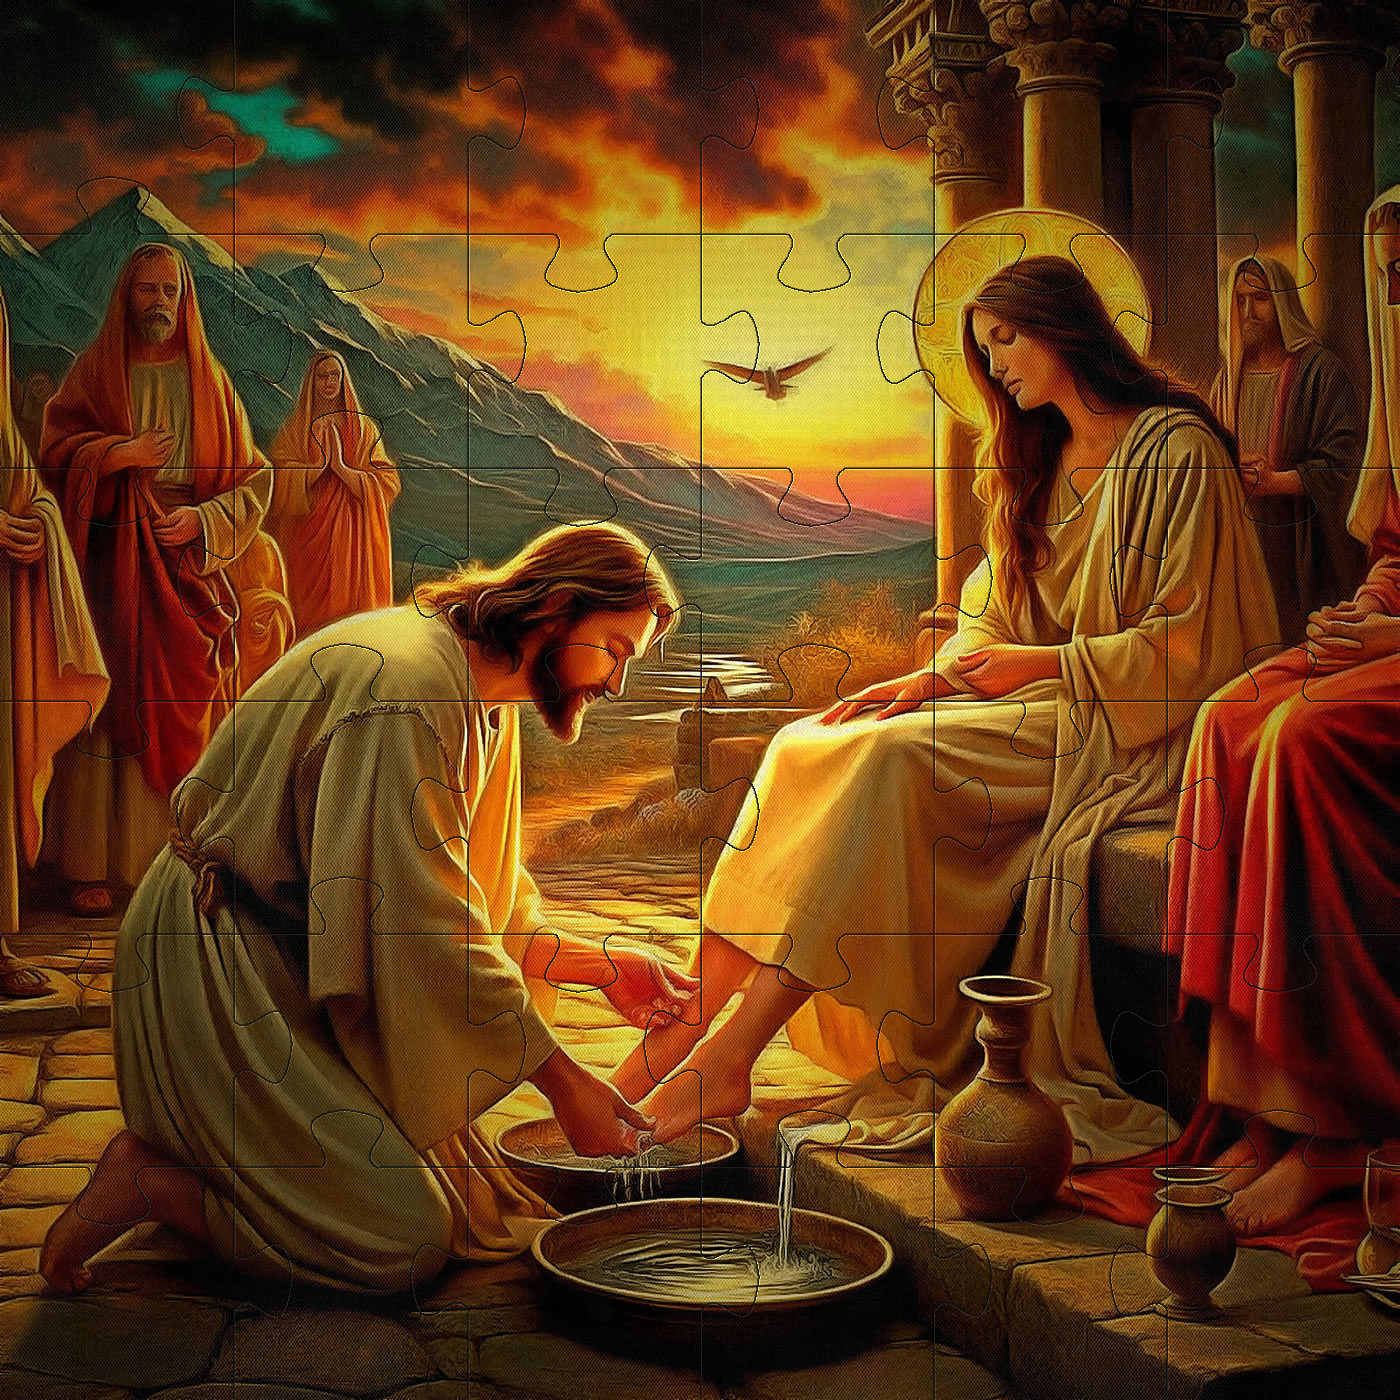 Jigsaw Version of Imaginary Bible Scene with Jesus washing Mary Magdalene's feet